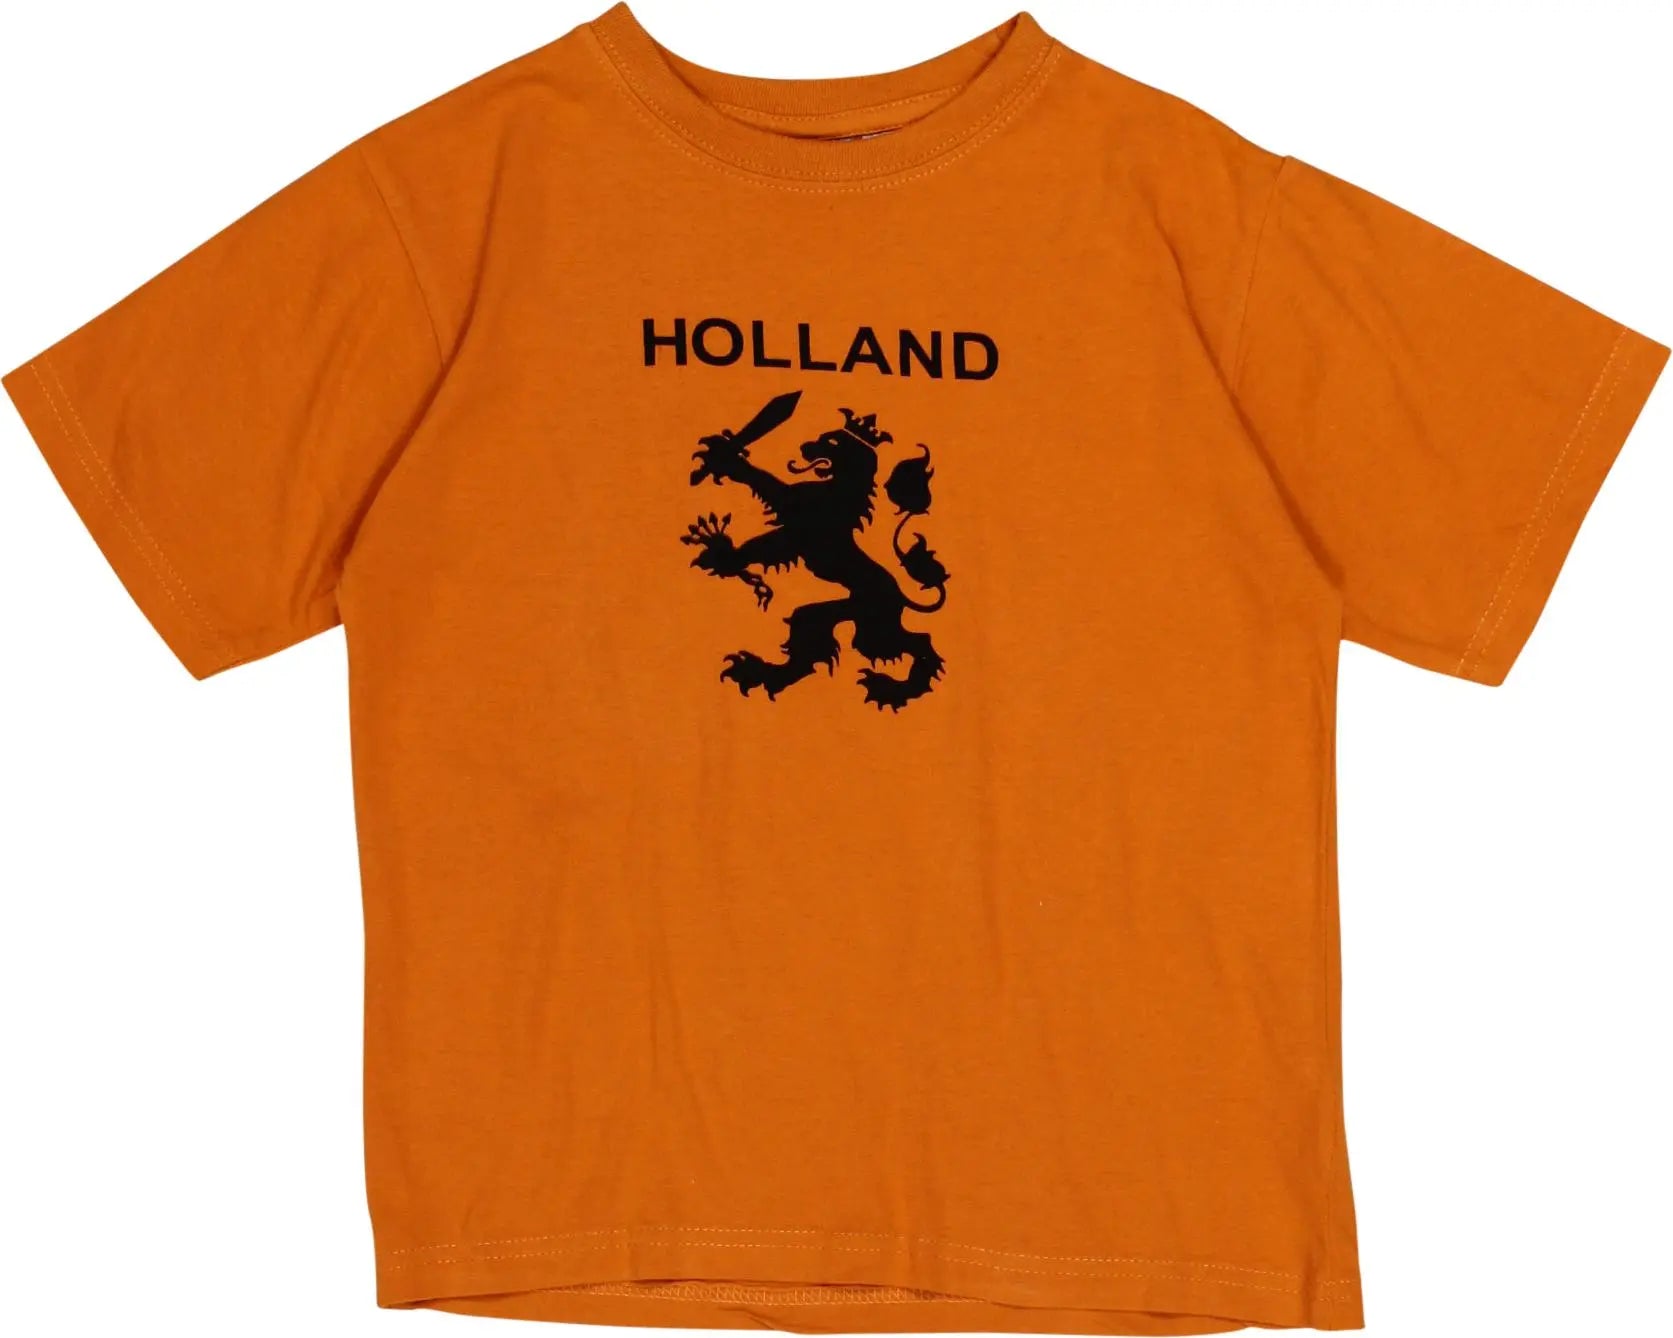 Europe Kids - Orange Holland Short Sleeve Shirt- ThriftTale.com - Vintage and second handclothing